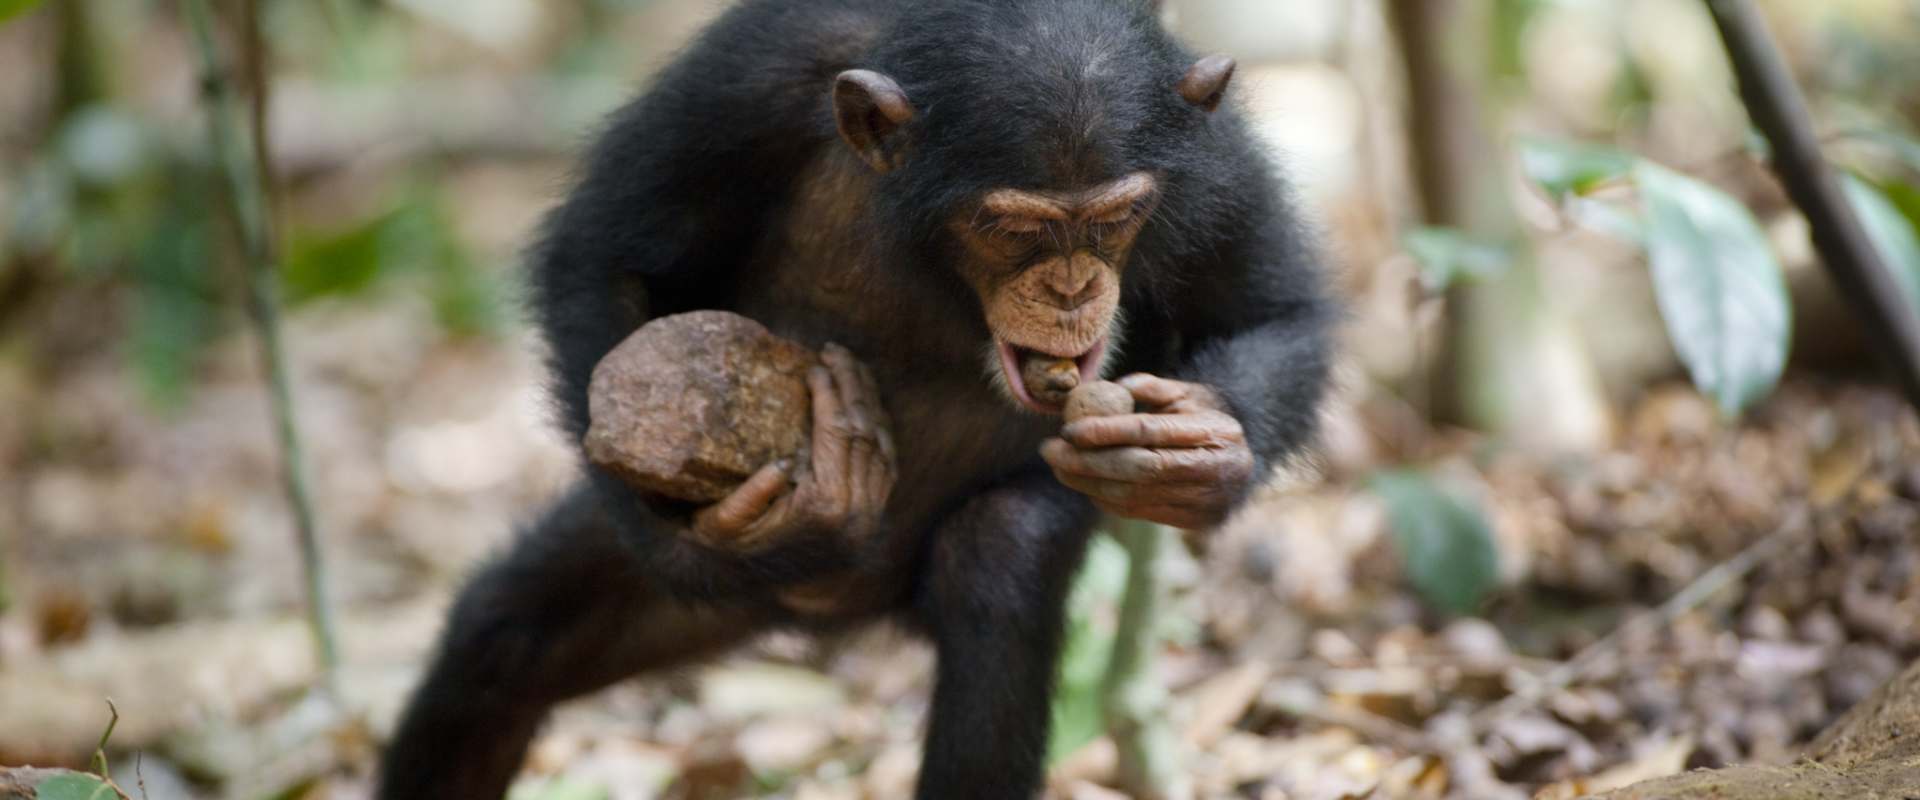 Chimpanzee background 2